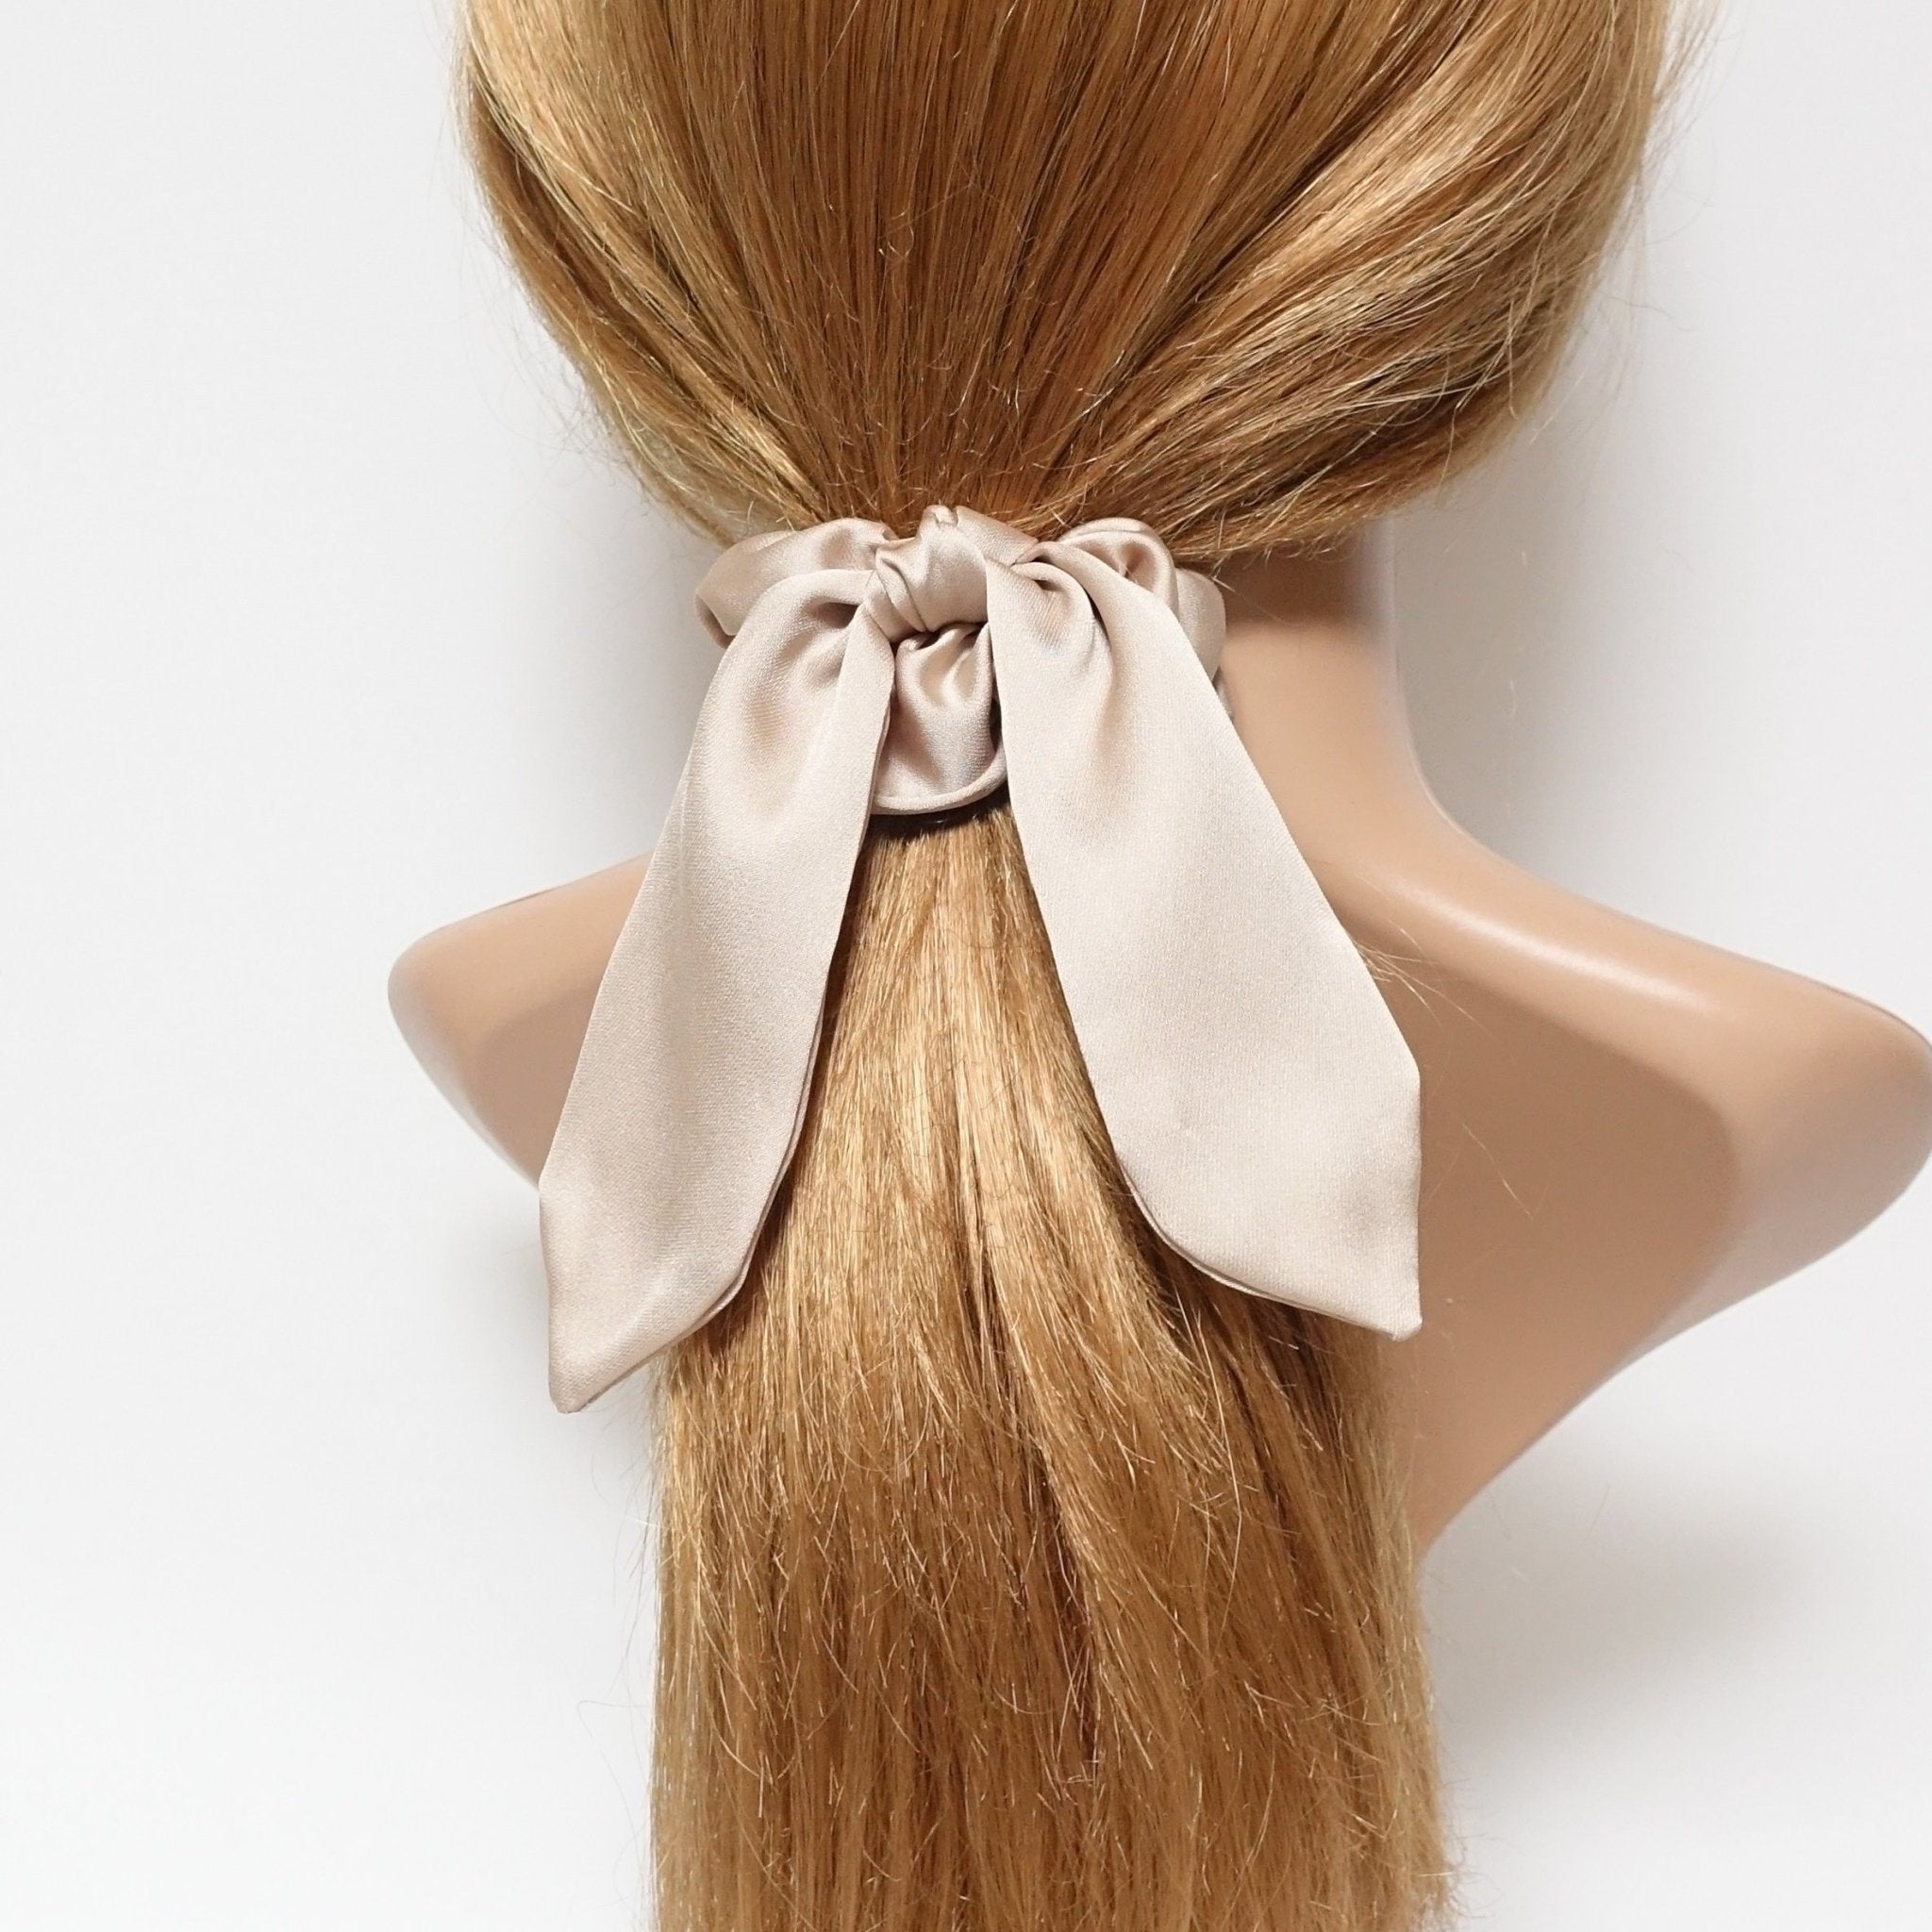 veryshine.com scrunchies/hair holder Beige satin hair bow knot scrunchies glossy tail bow scrunchy women hair accessory